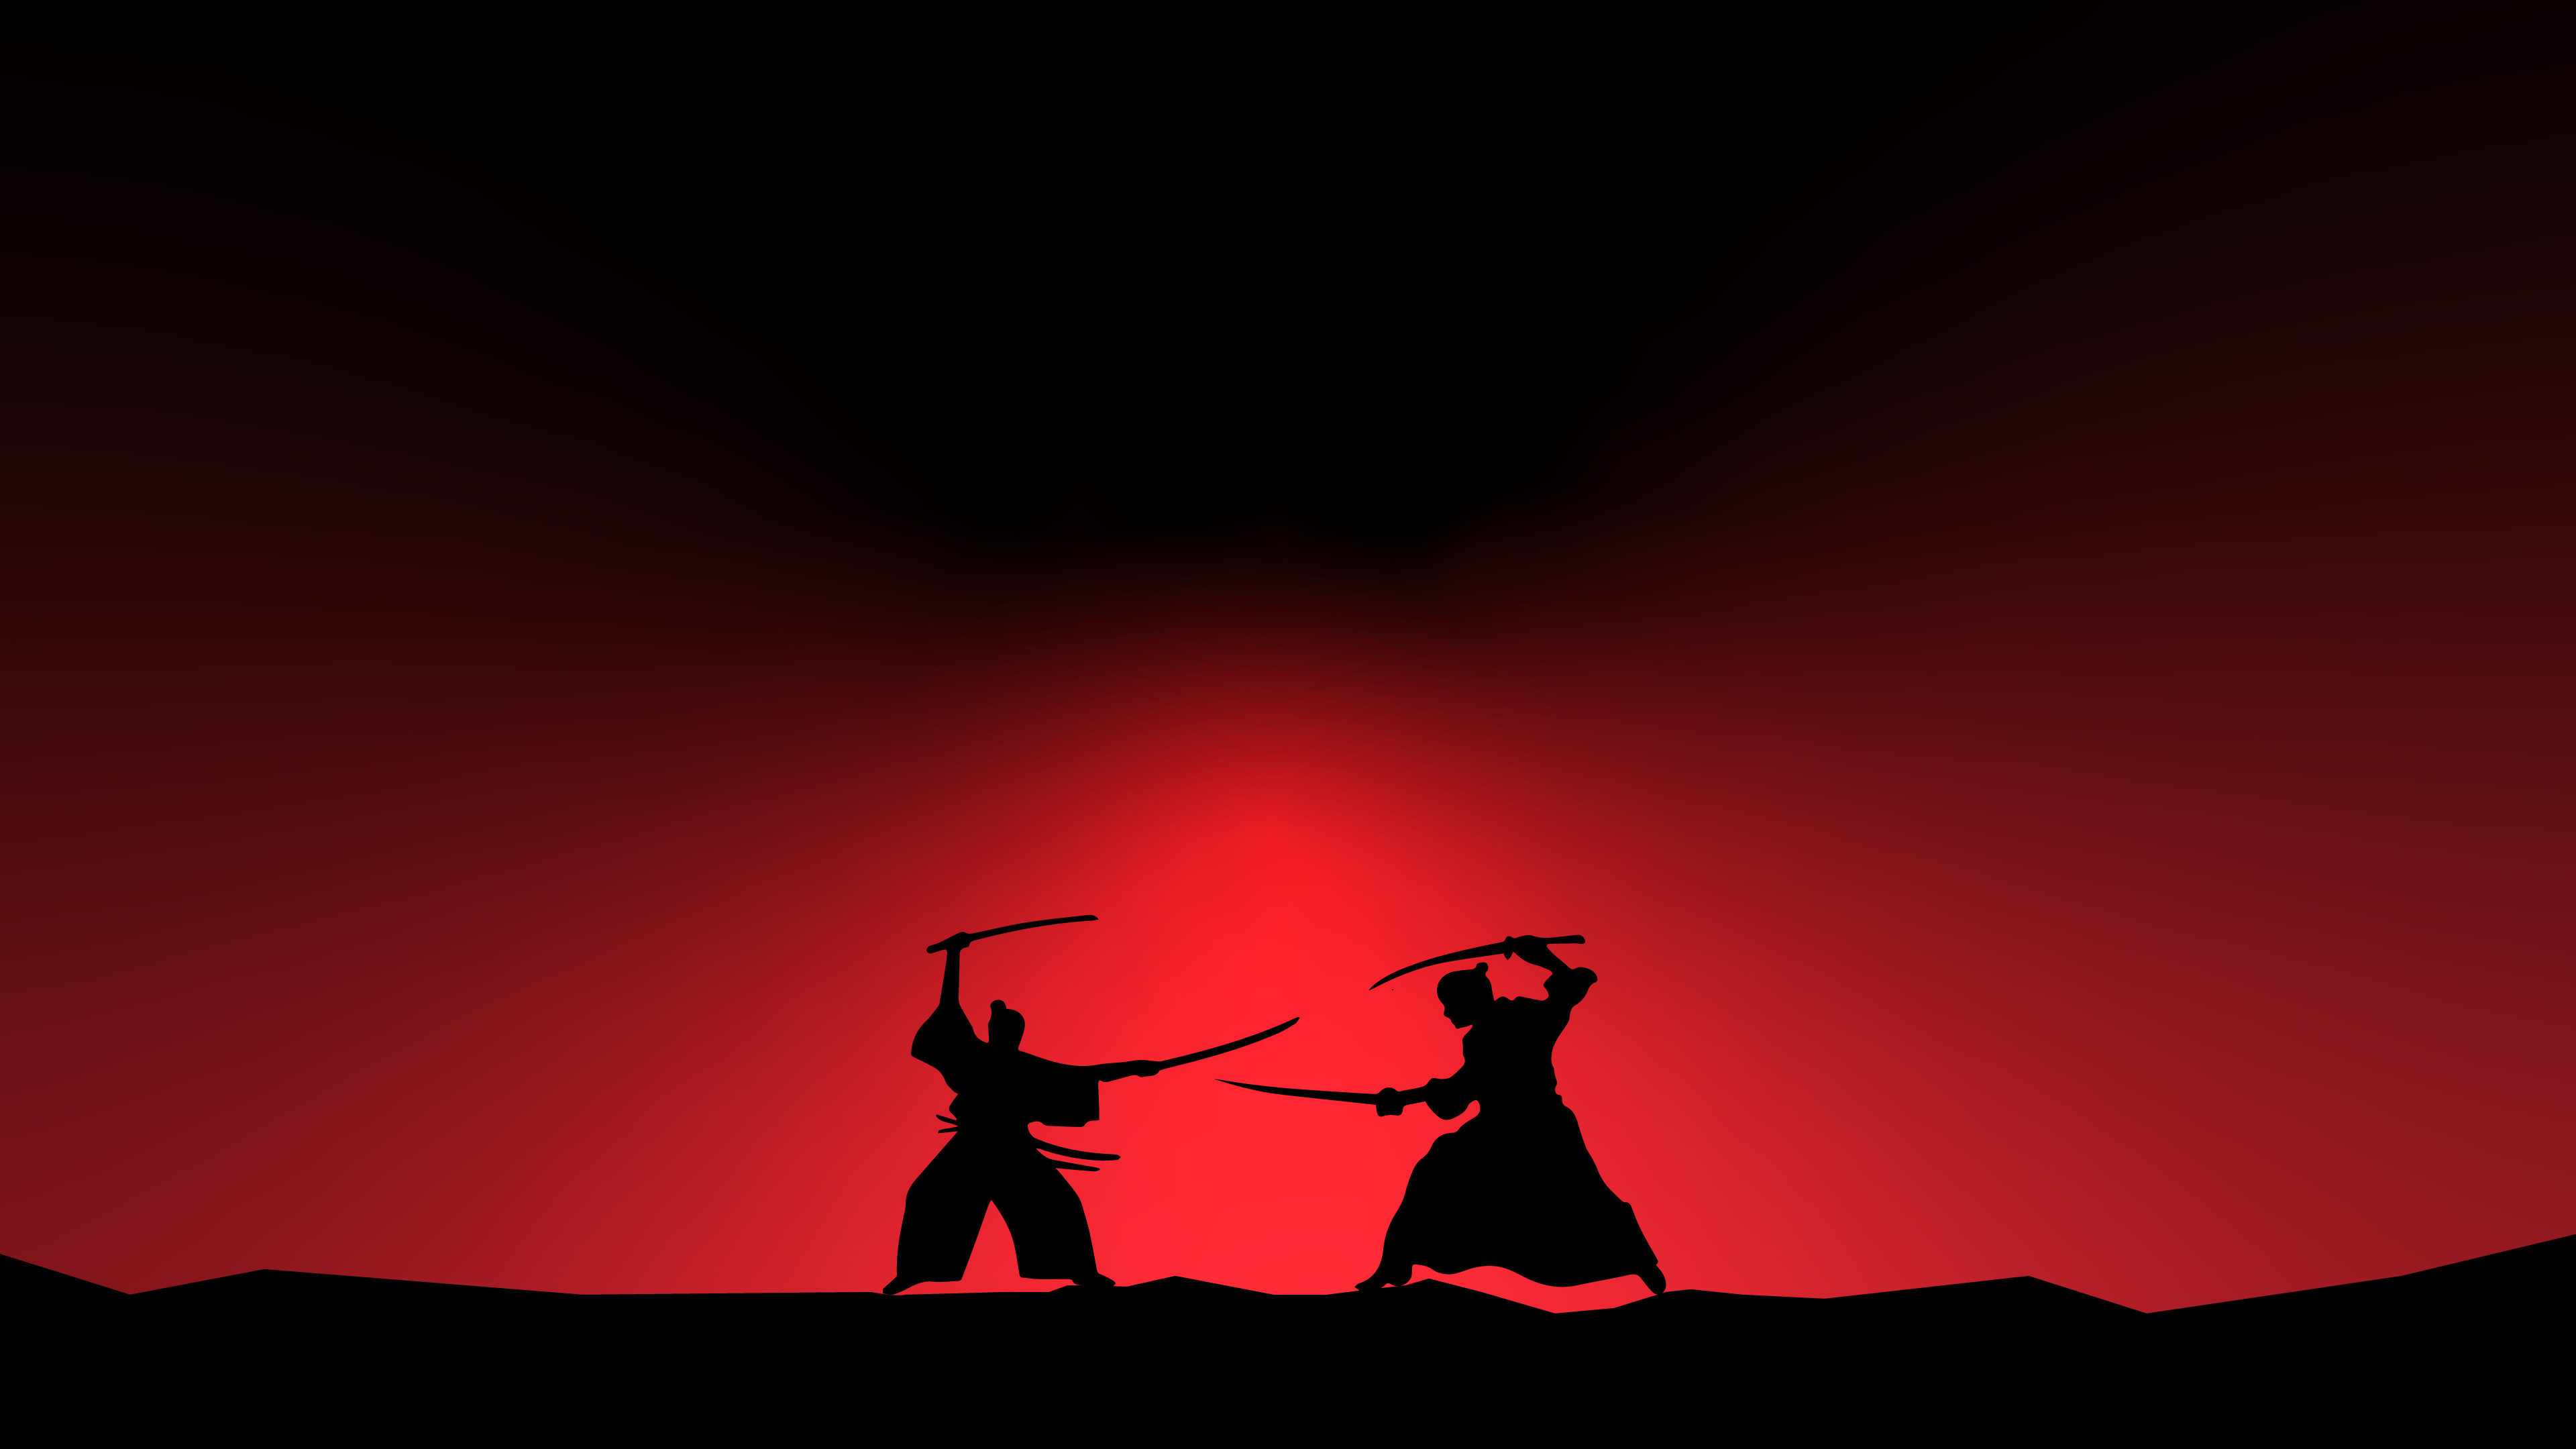 Sword Fighting: Japanese samurai fan art, Swordsmen with katana and tanto, Sword dueling. 3840x2160 4K Wallpaper.